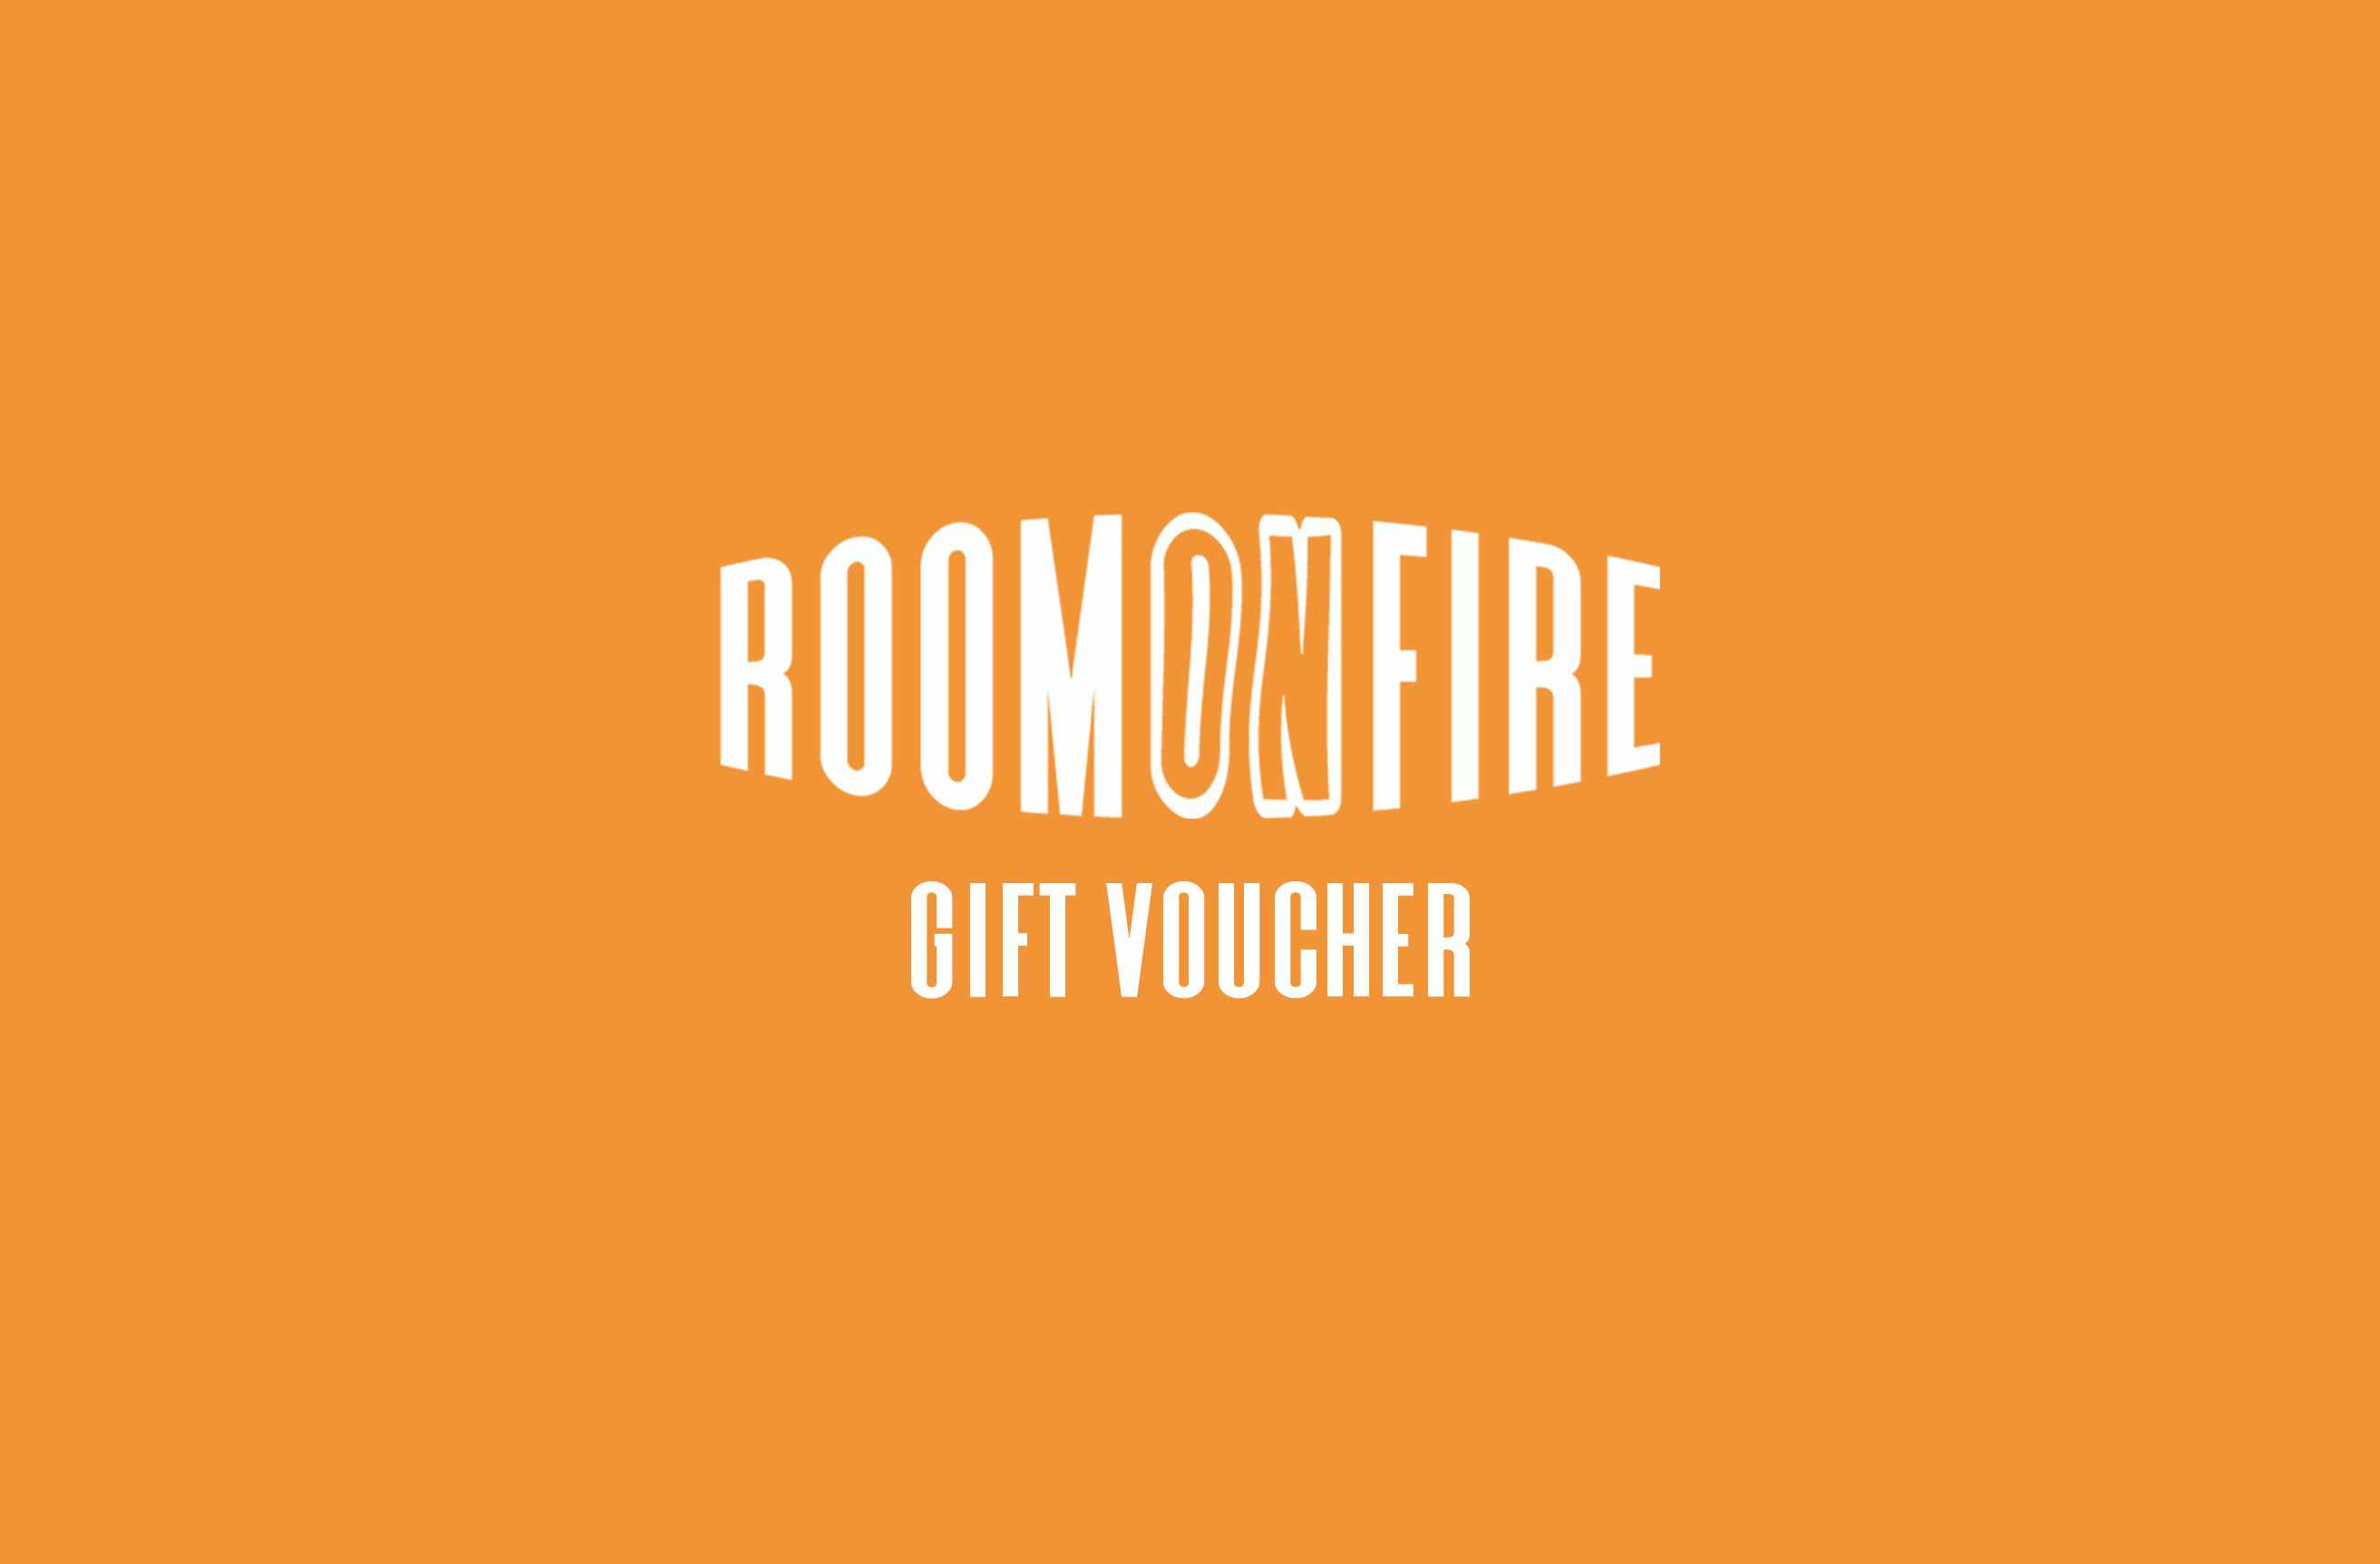 Room On Fire eVoucher-Room On Fire